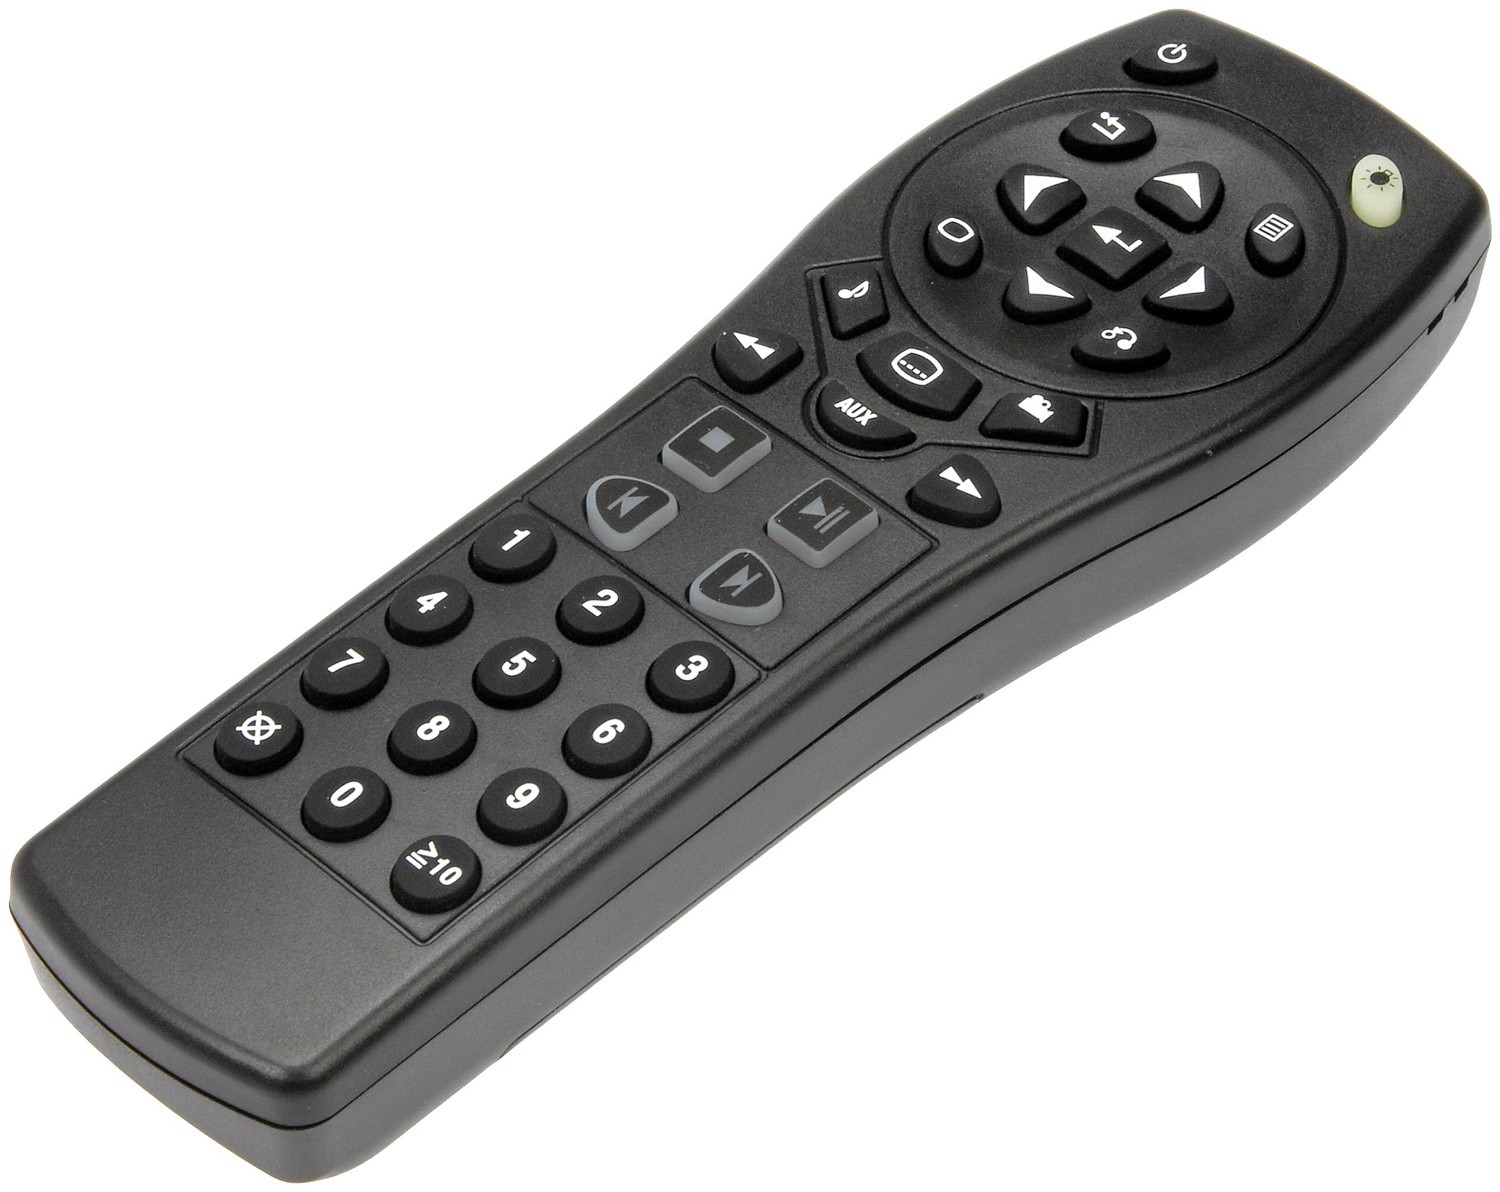 DORMAN - HELP - Dvd Player Remote Control - RNB 57001